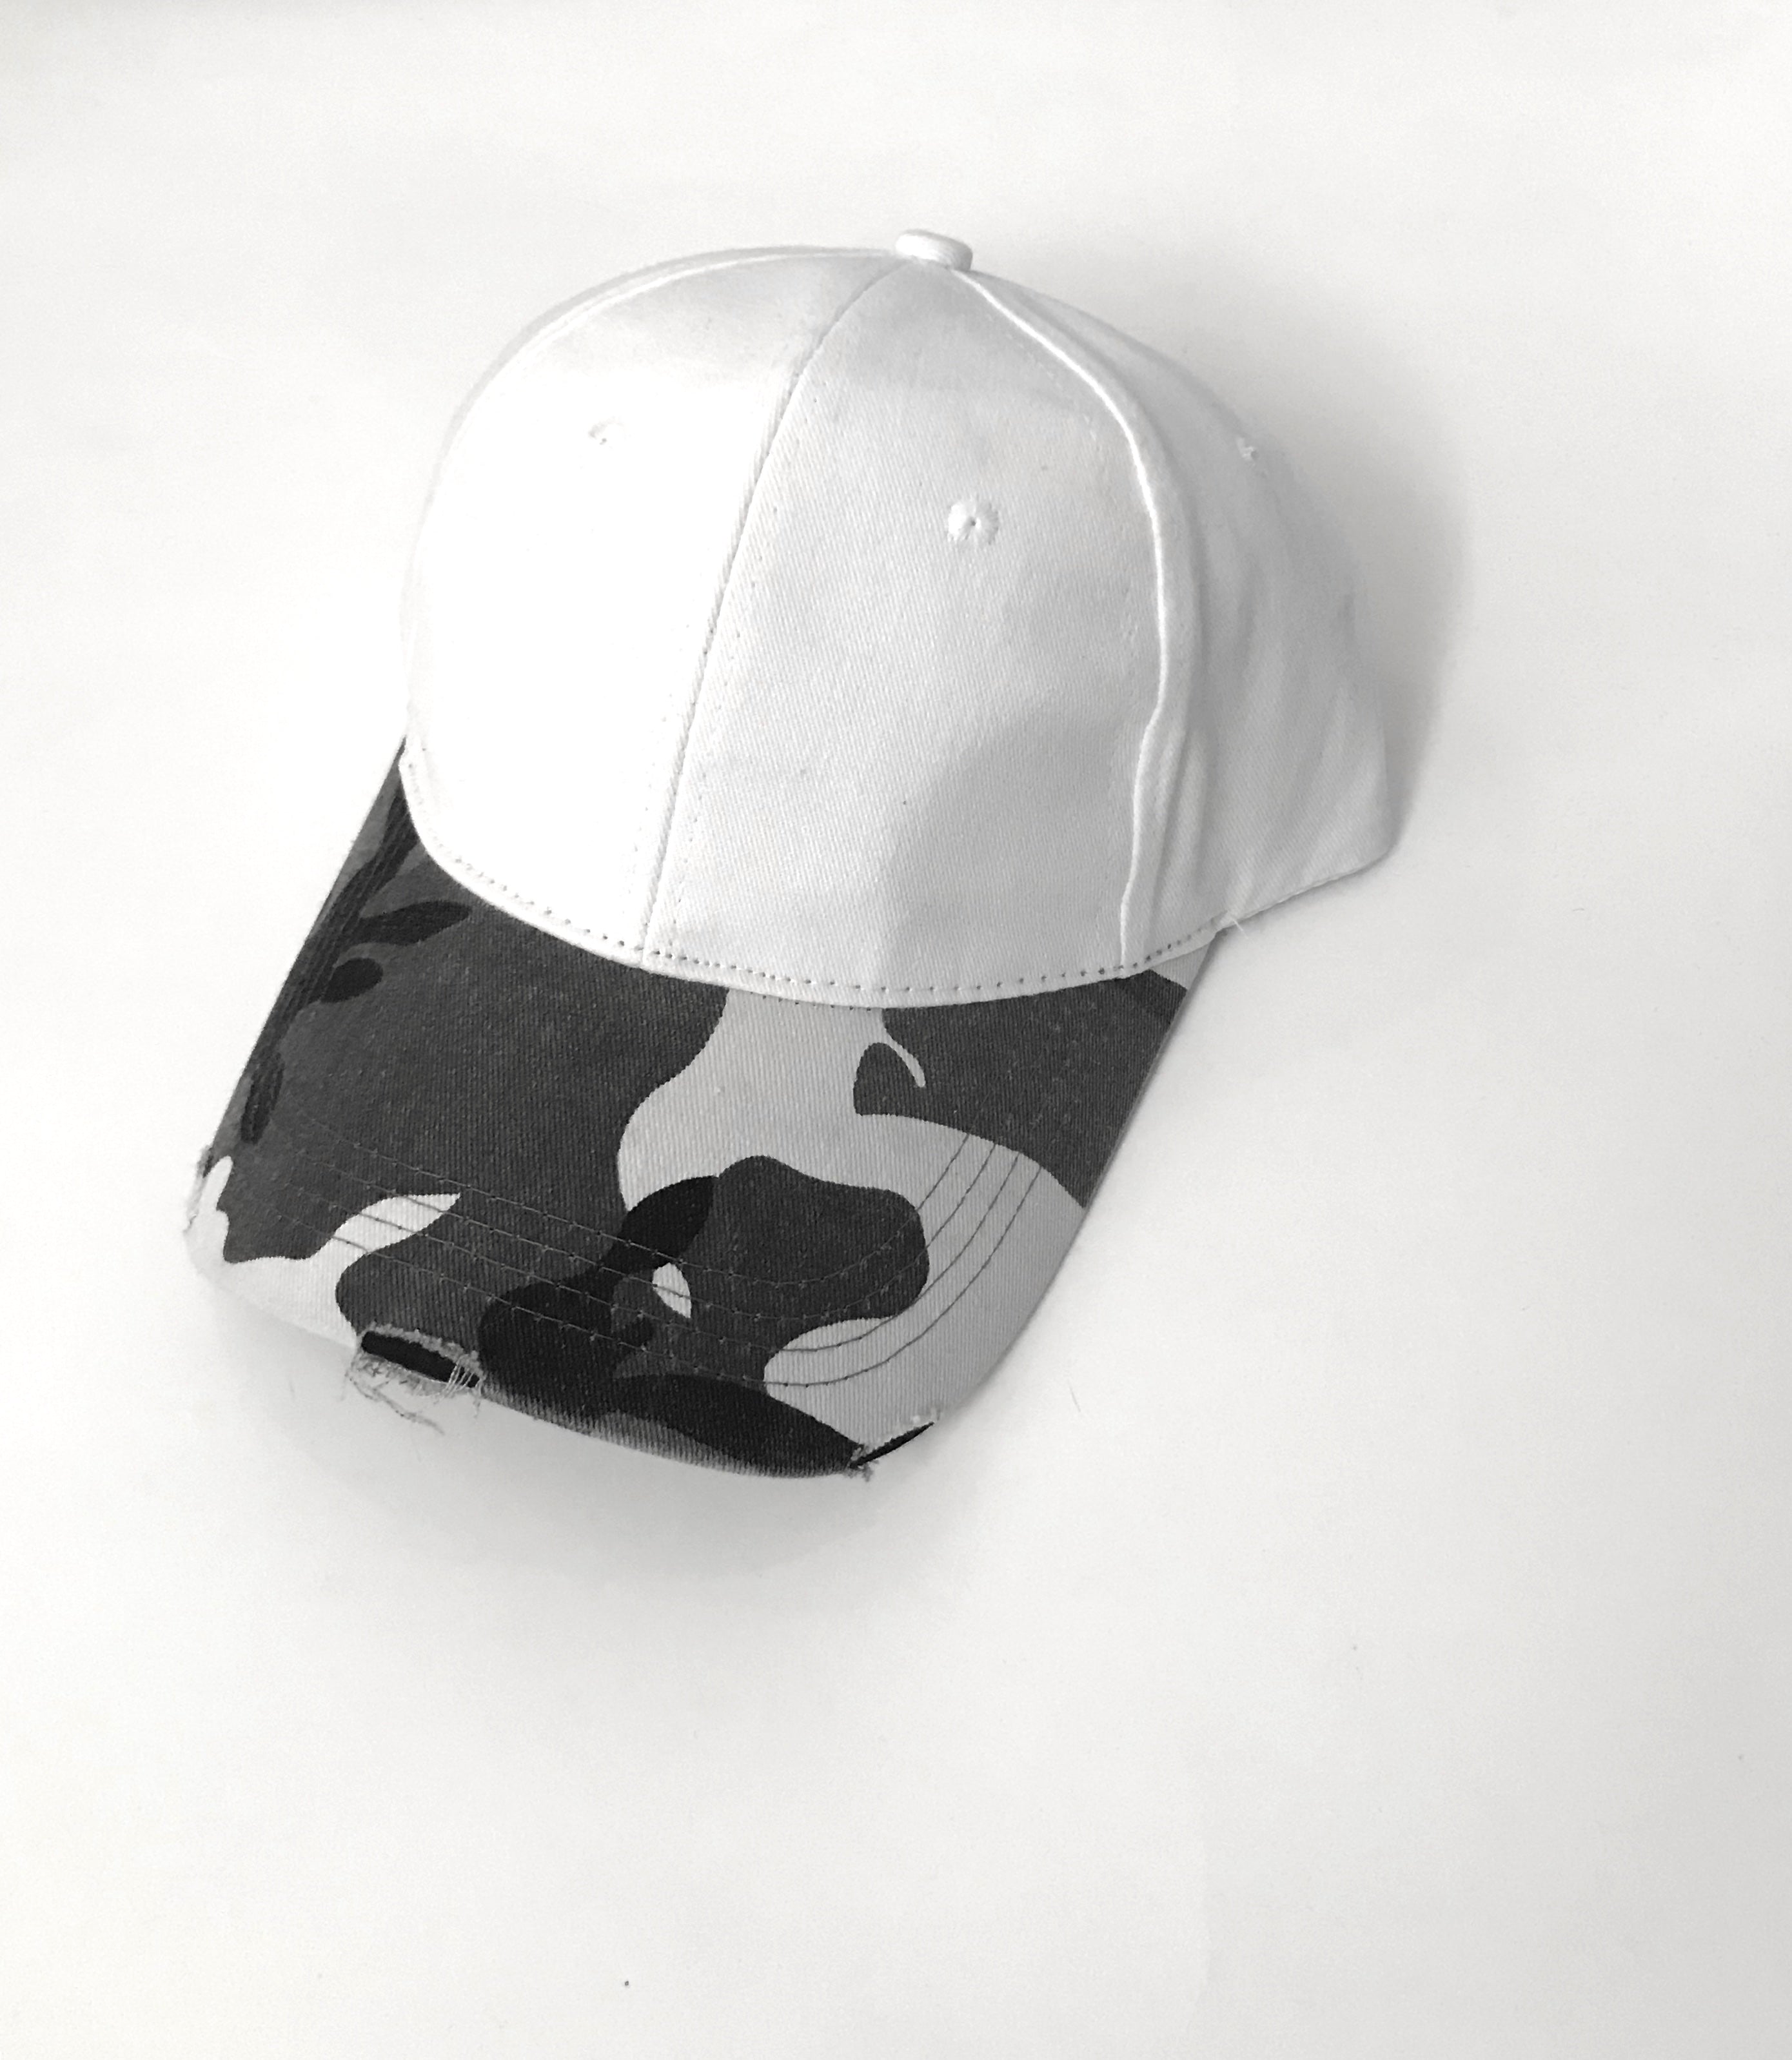 boardwalk baseball cap white/gray camo